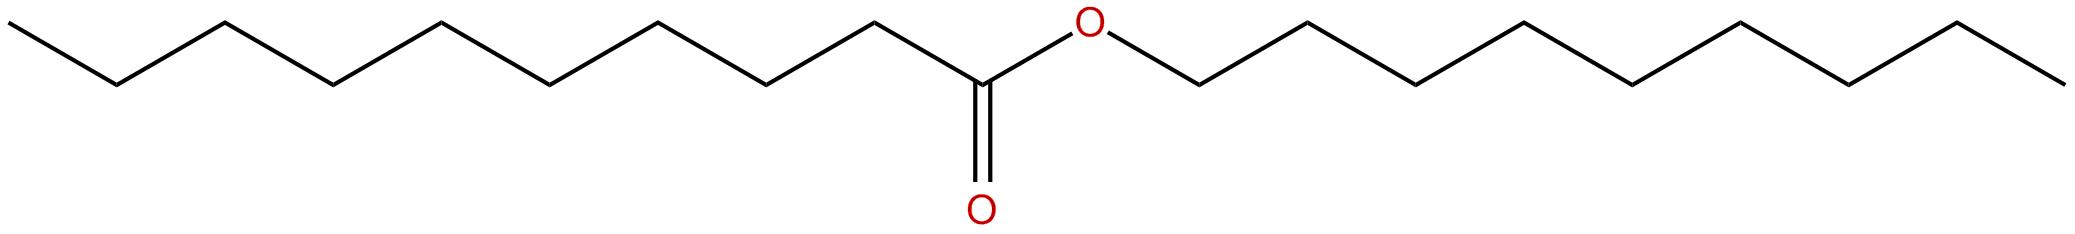 Image of nonyl decanoate